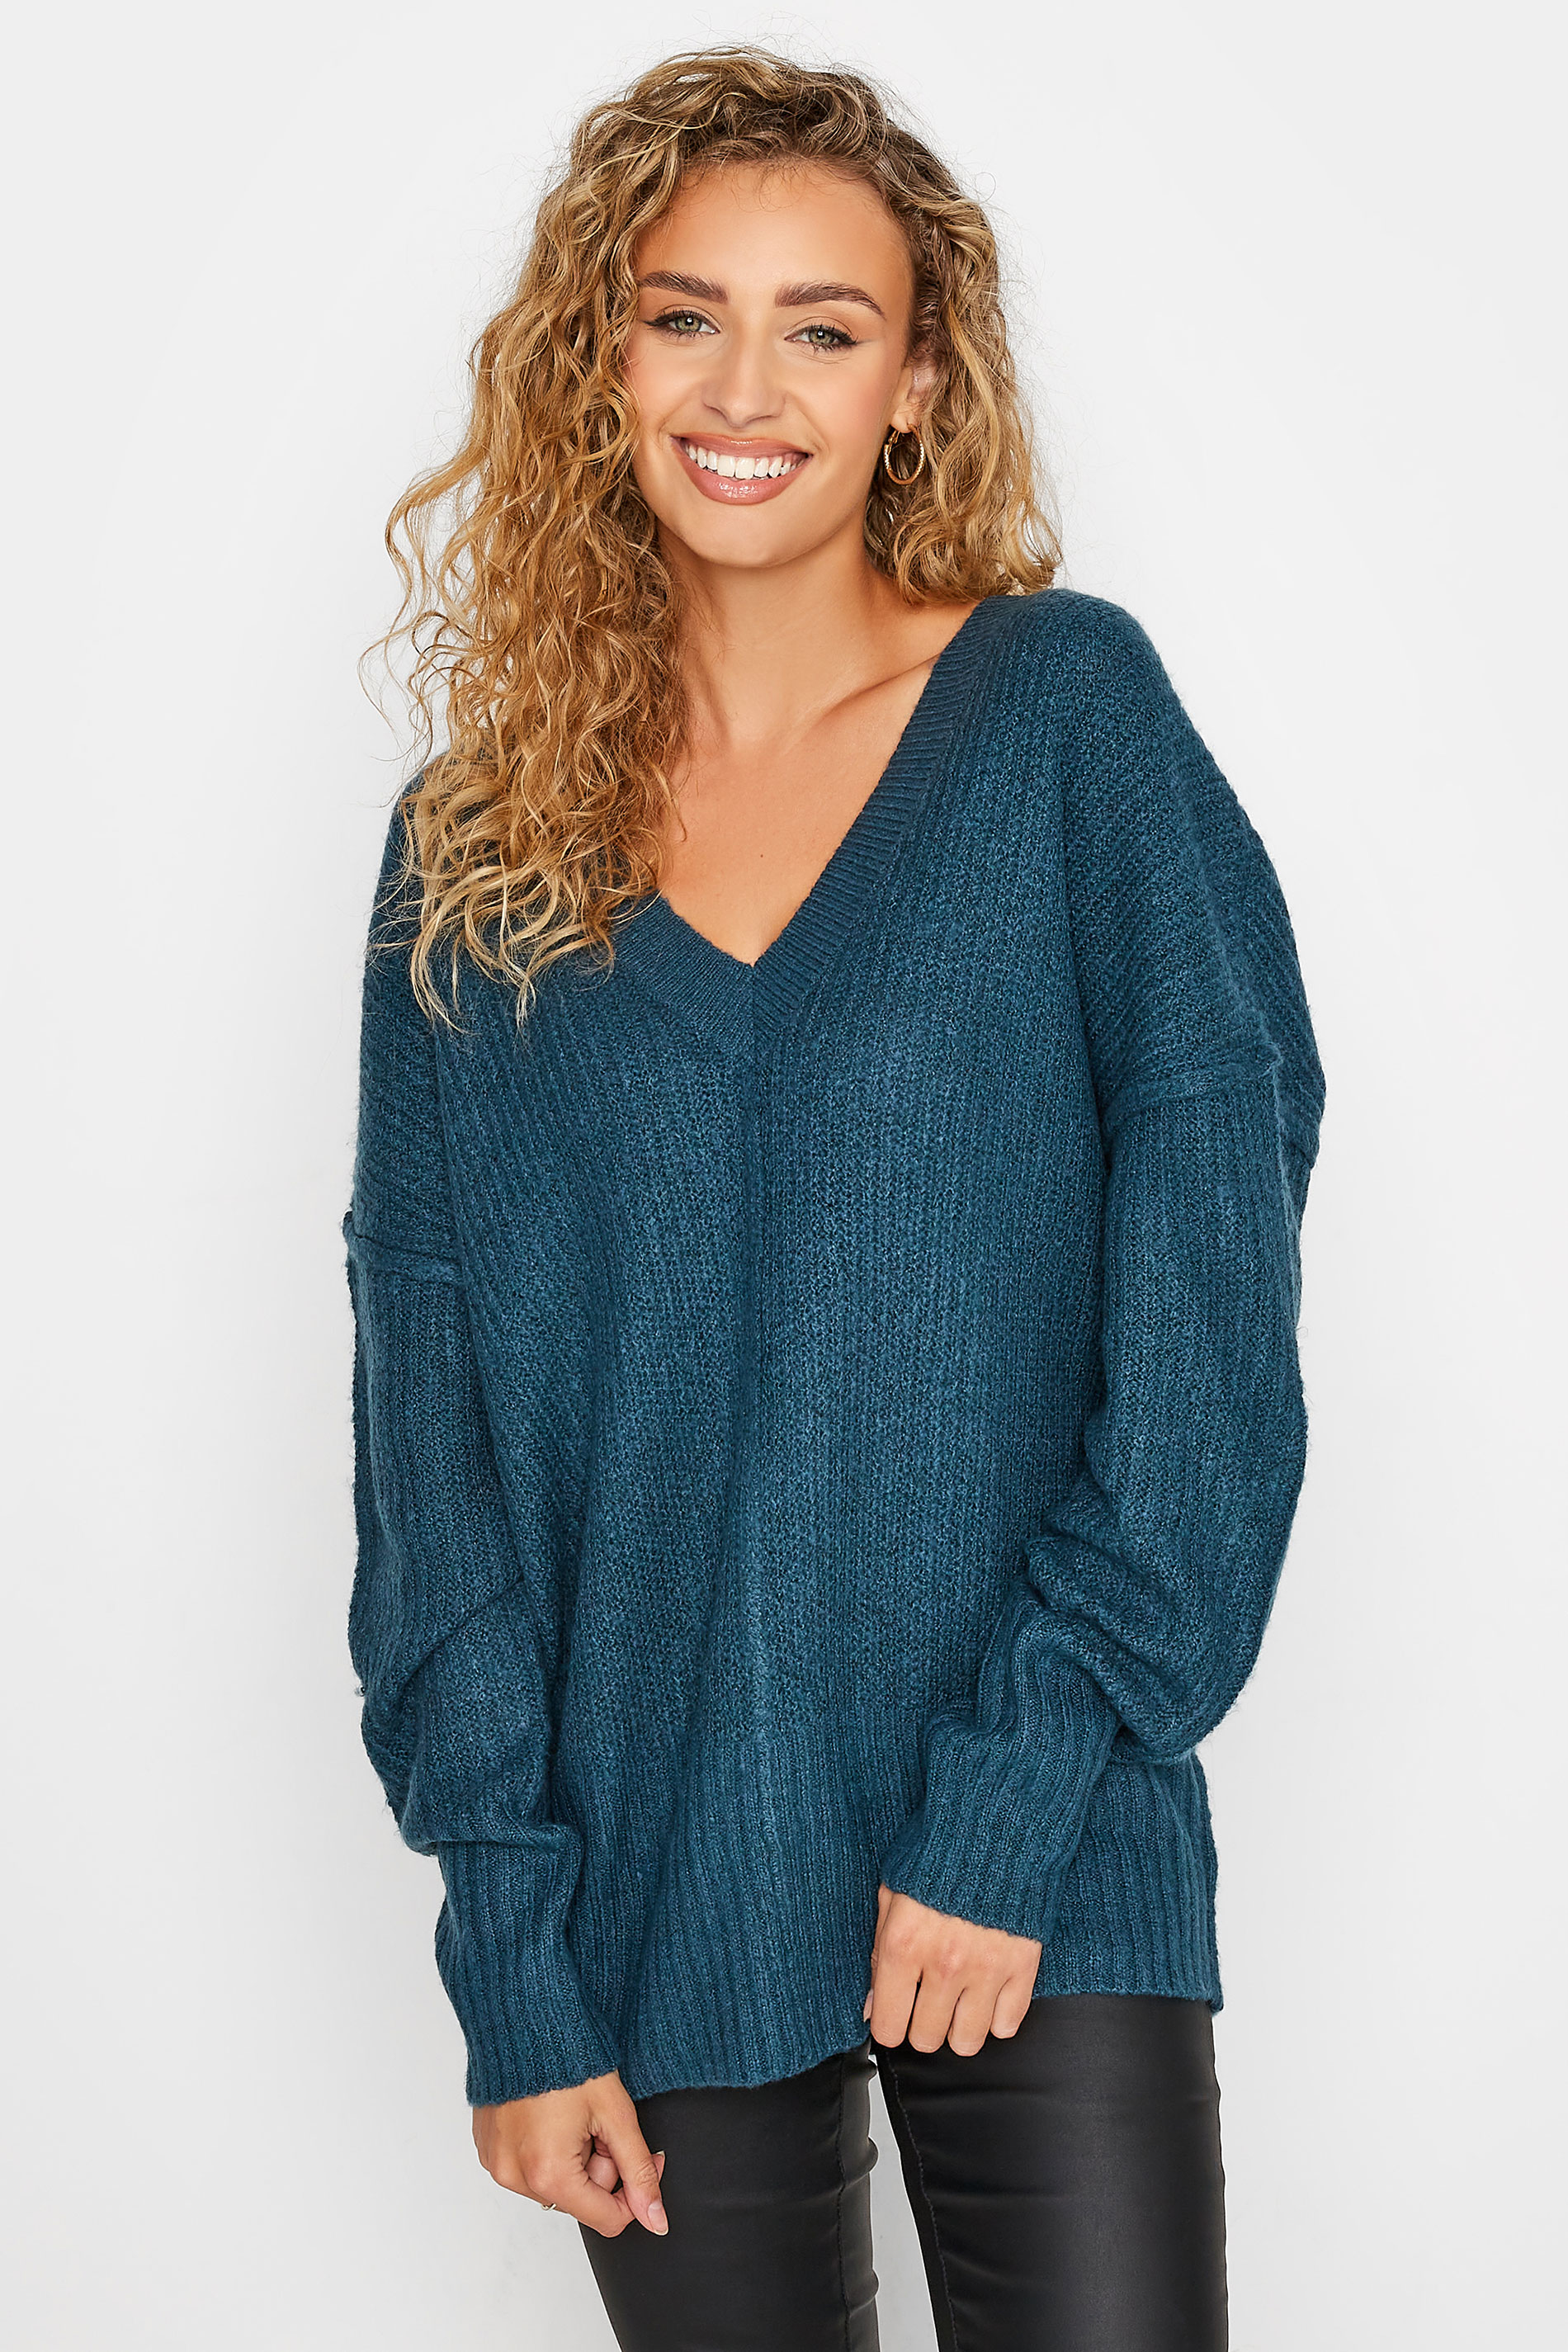 LTS Tall Women's Teal Blue V-Neck Knitted Jumper| Long Tall Sally  1